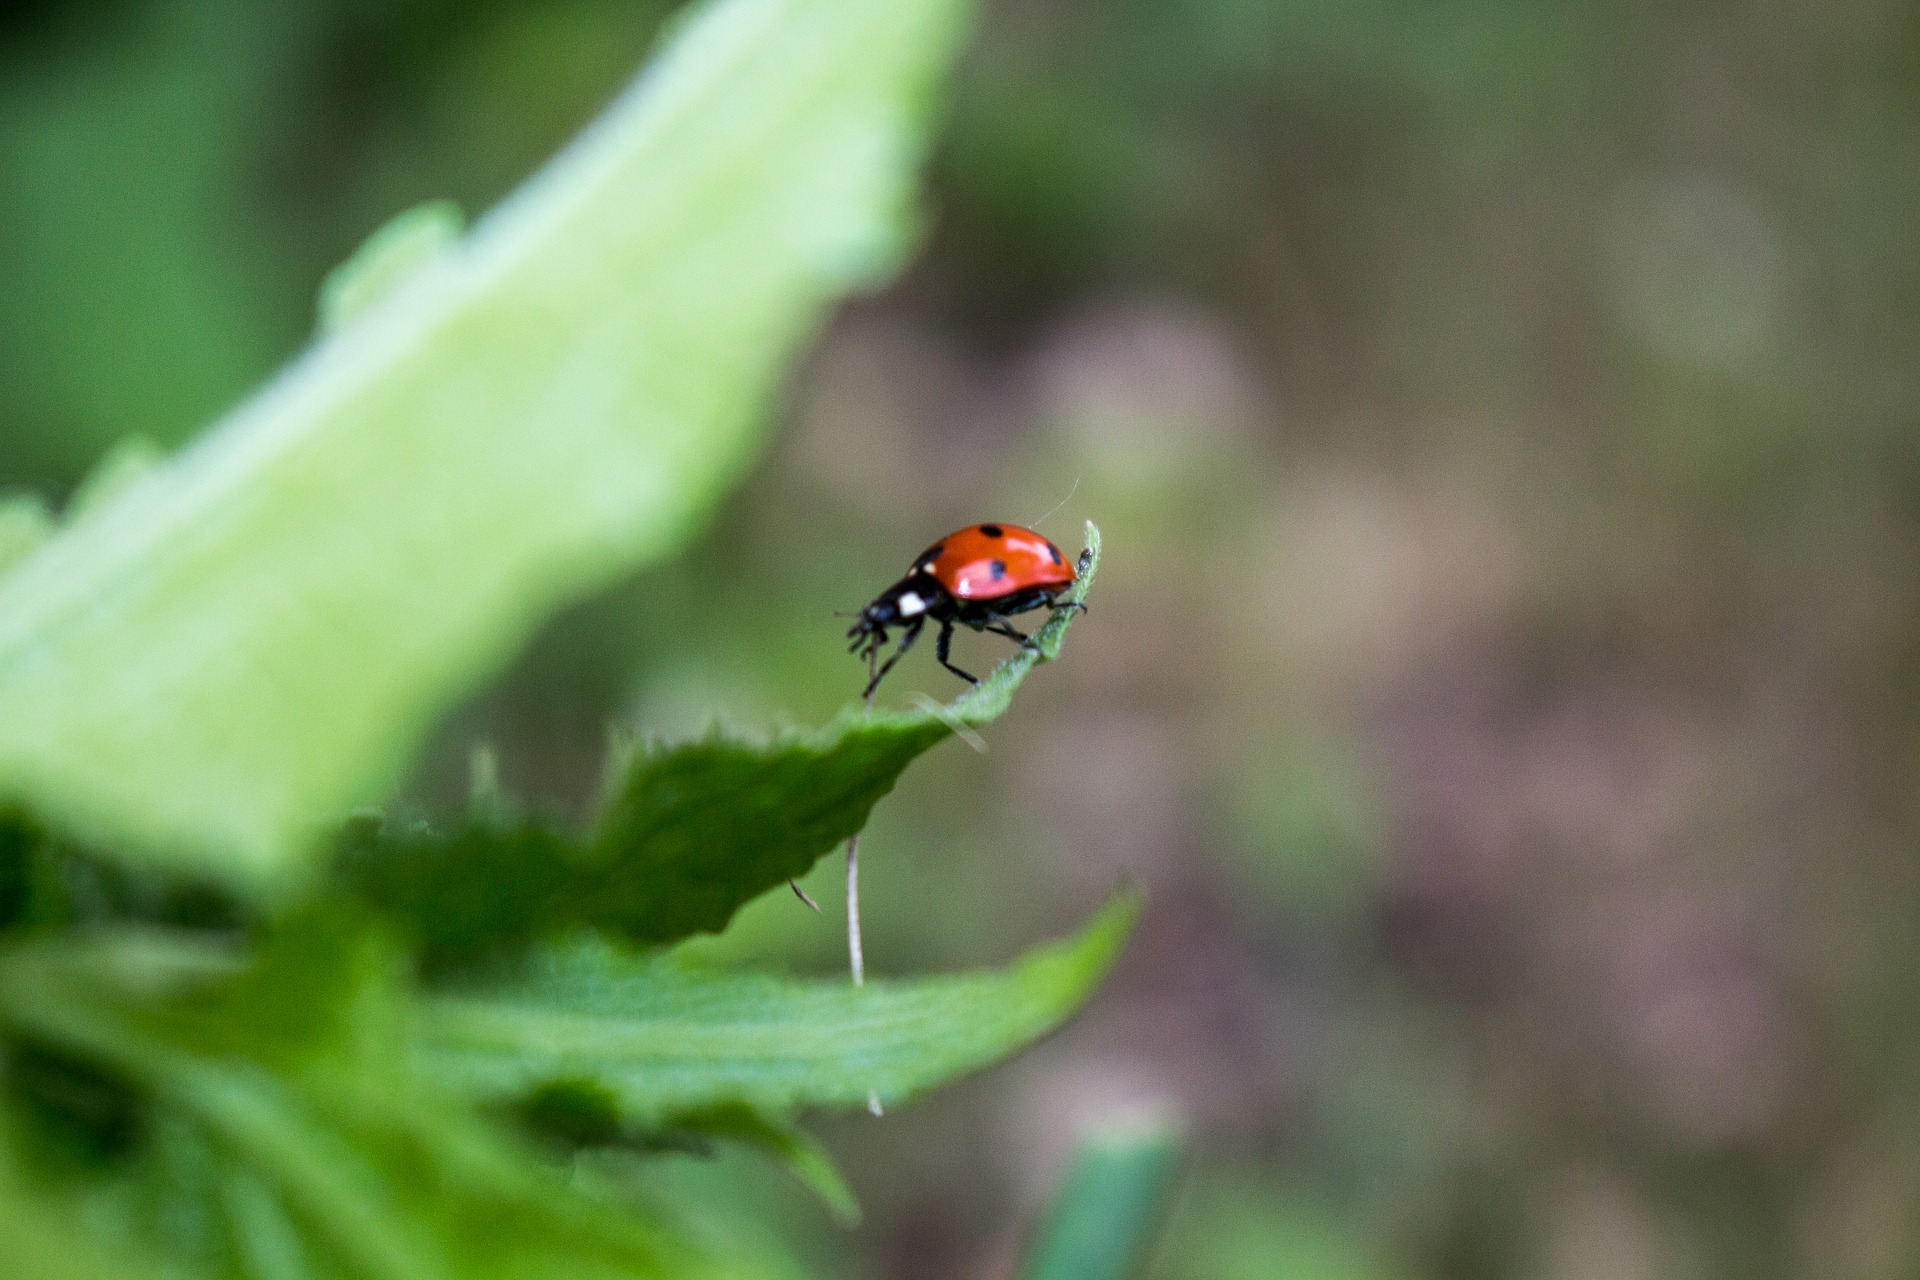 Ladybug walking across a leaf.